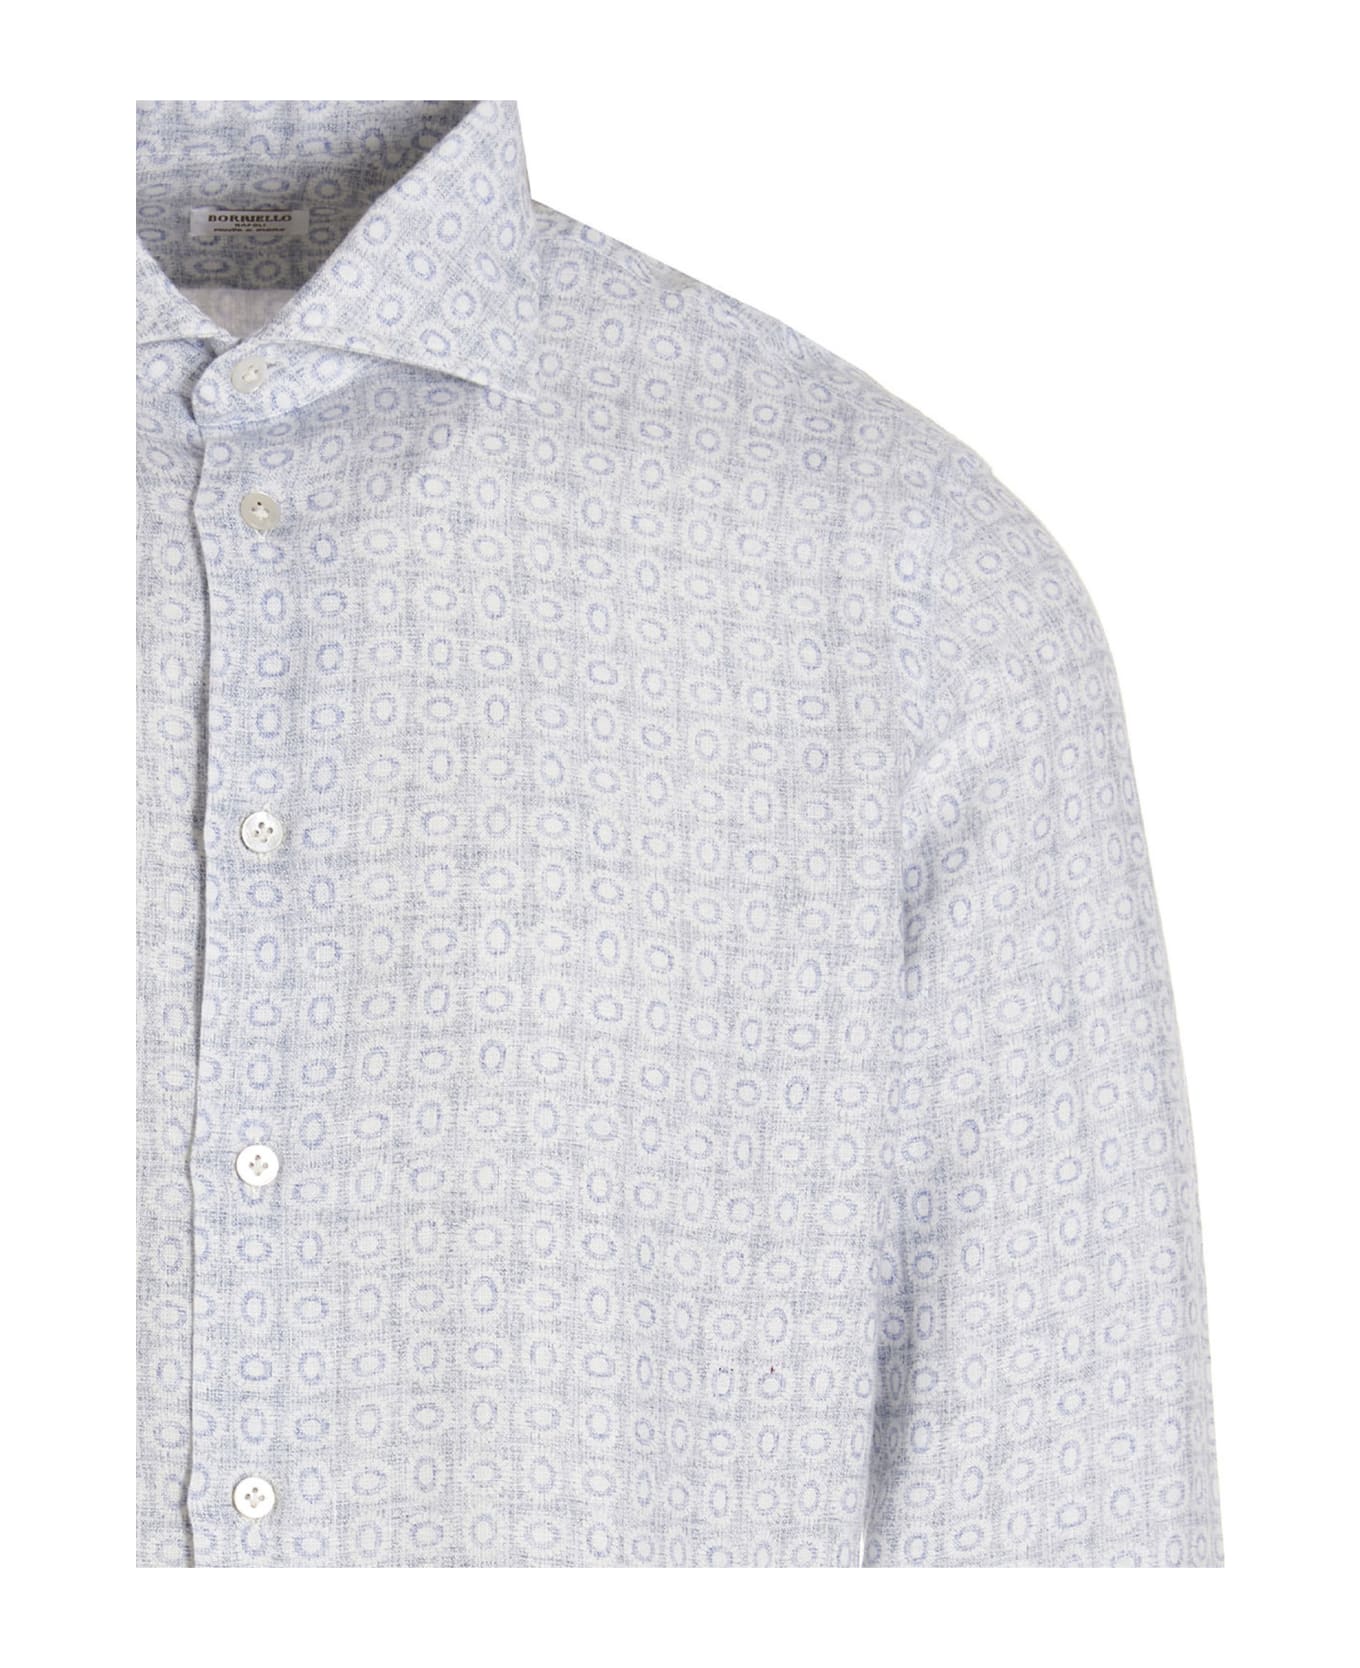 Borriello Napoli Printed Linen Shirt - Light Blue シャツ